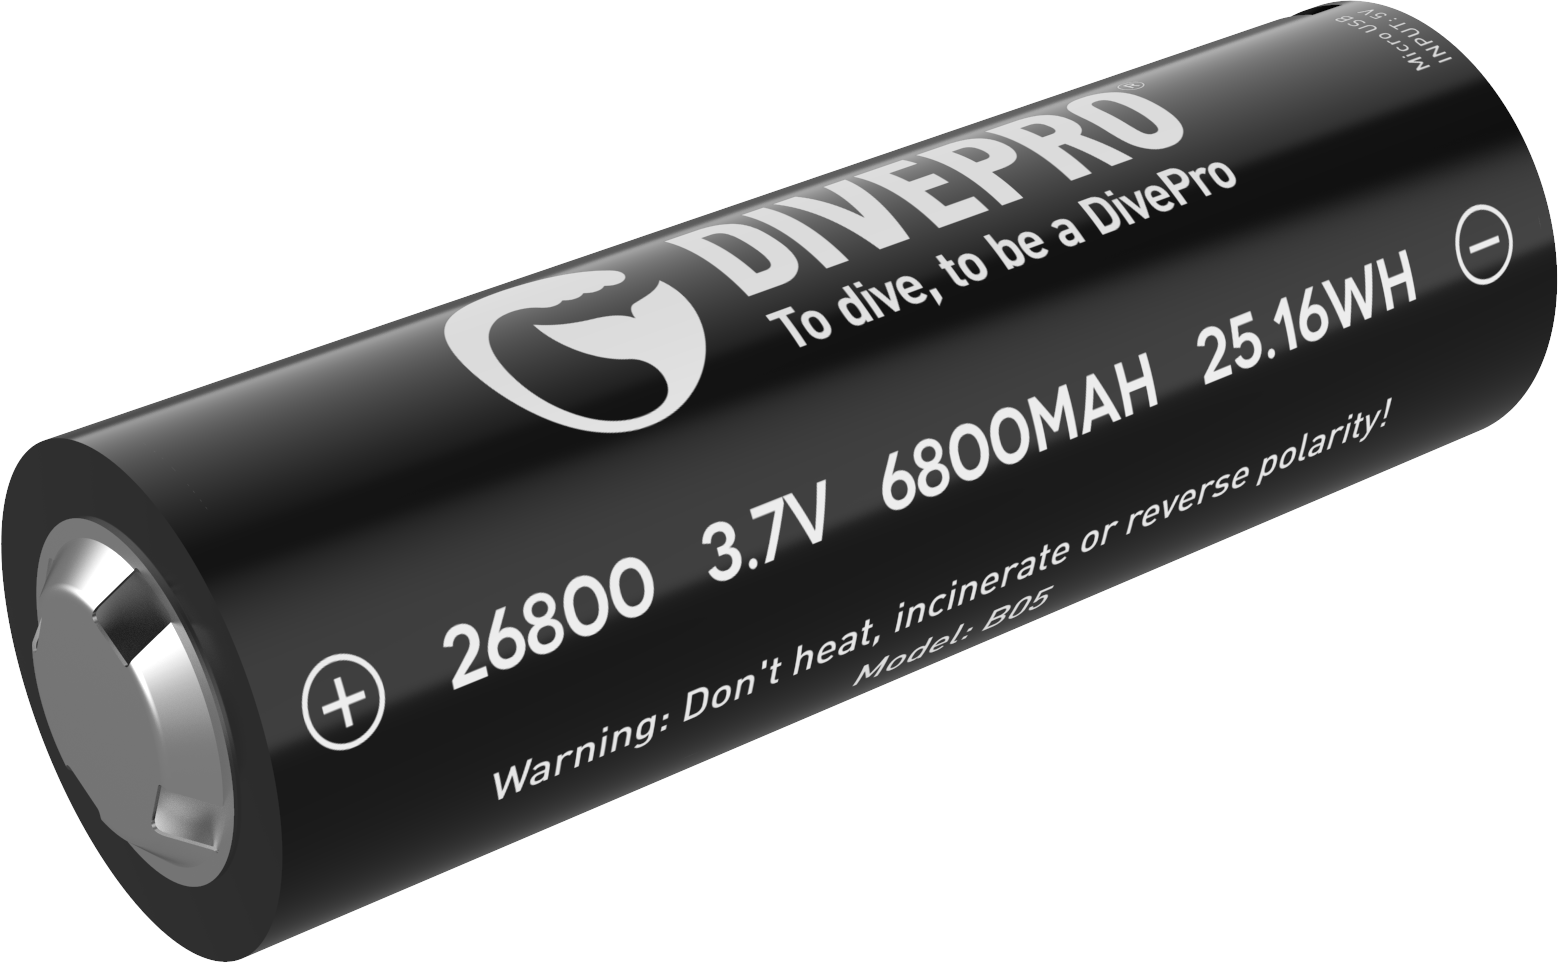 Divepro Divepro 26800 6800maH USB Rech Battery - Oyster Diving